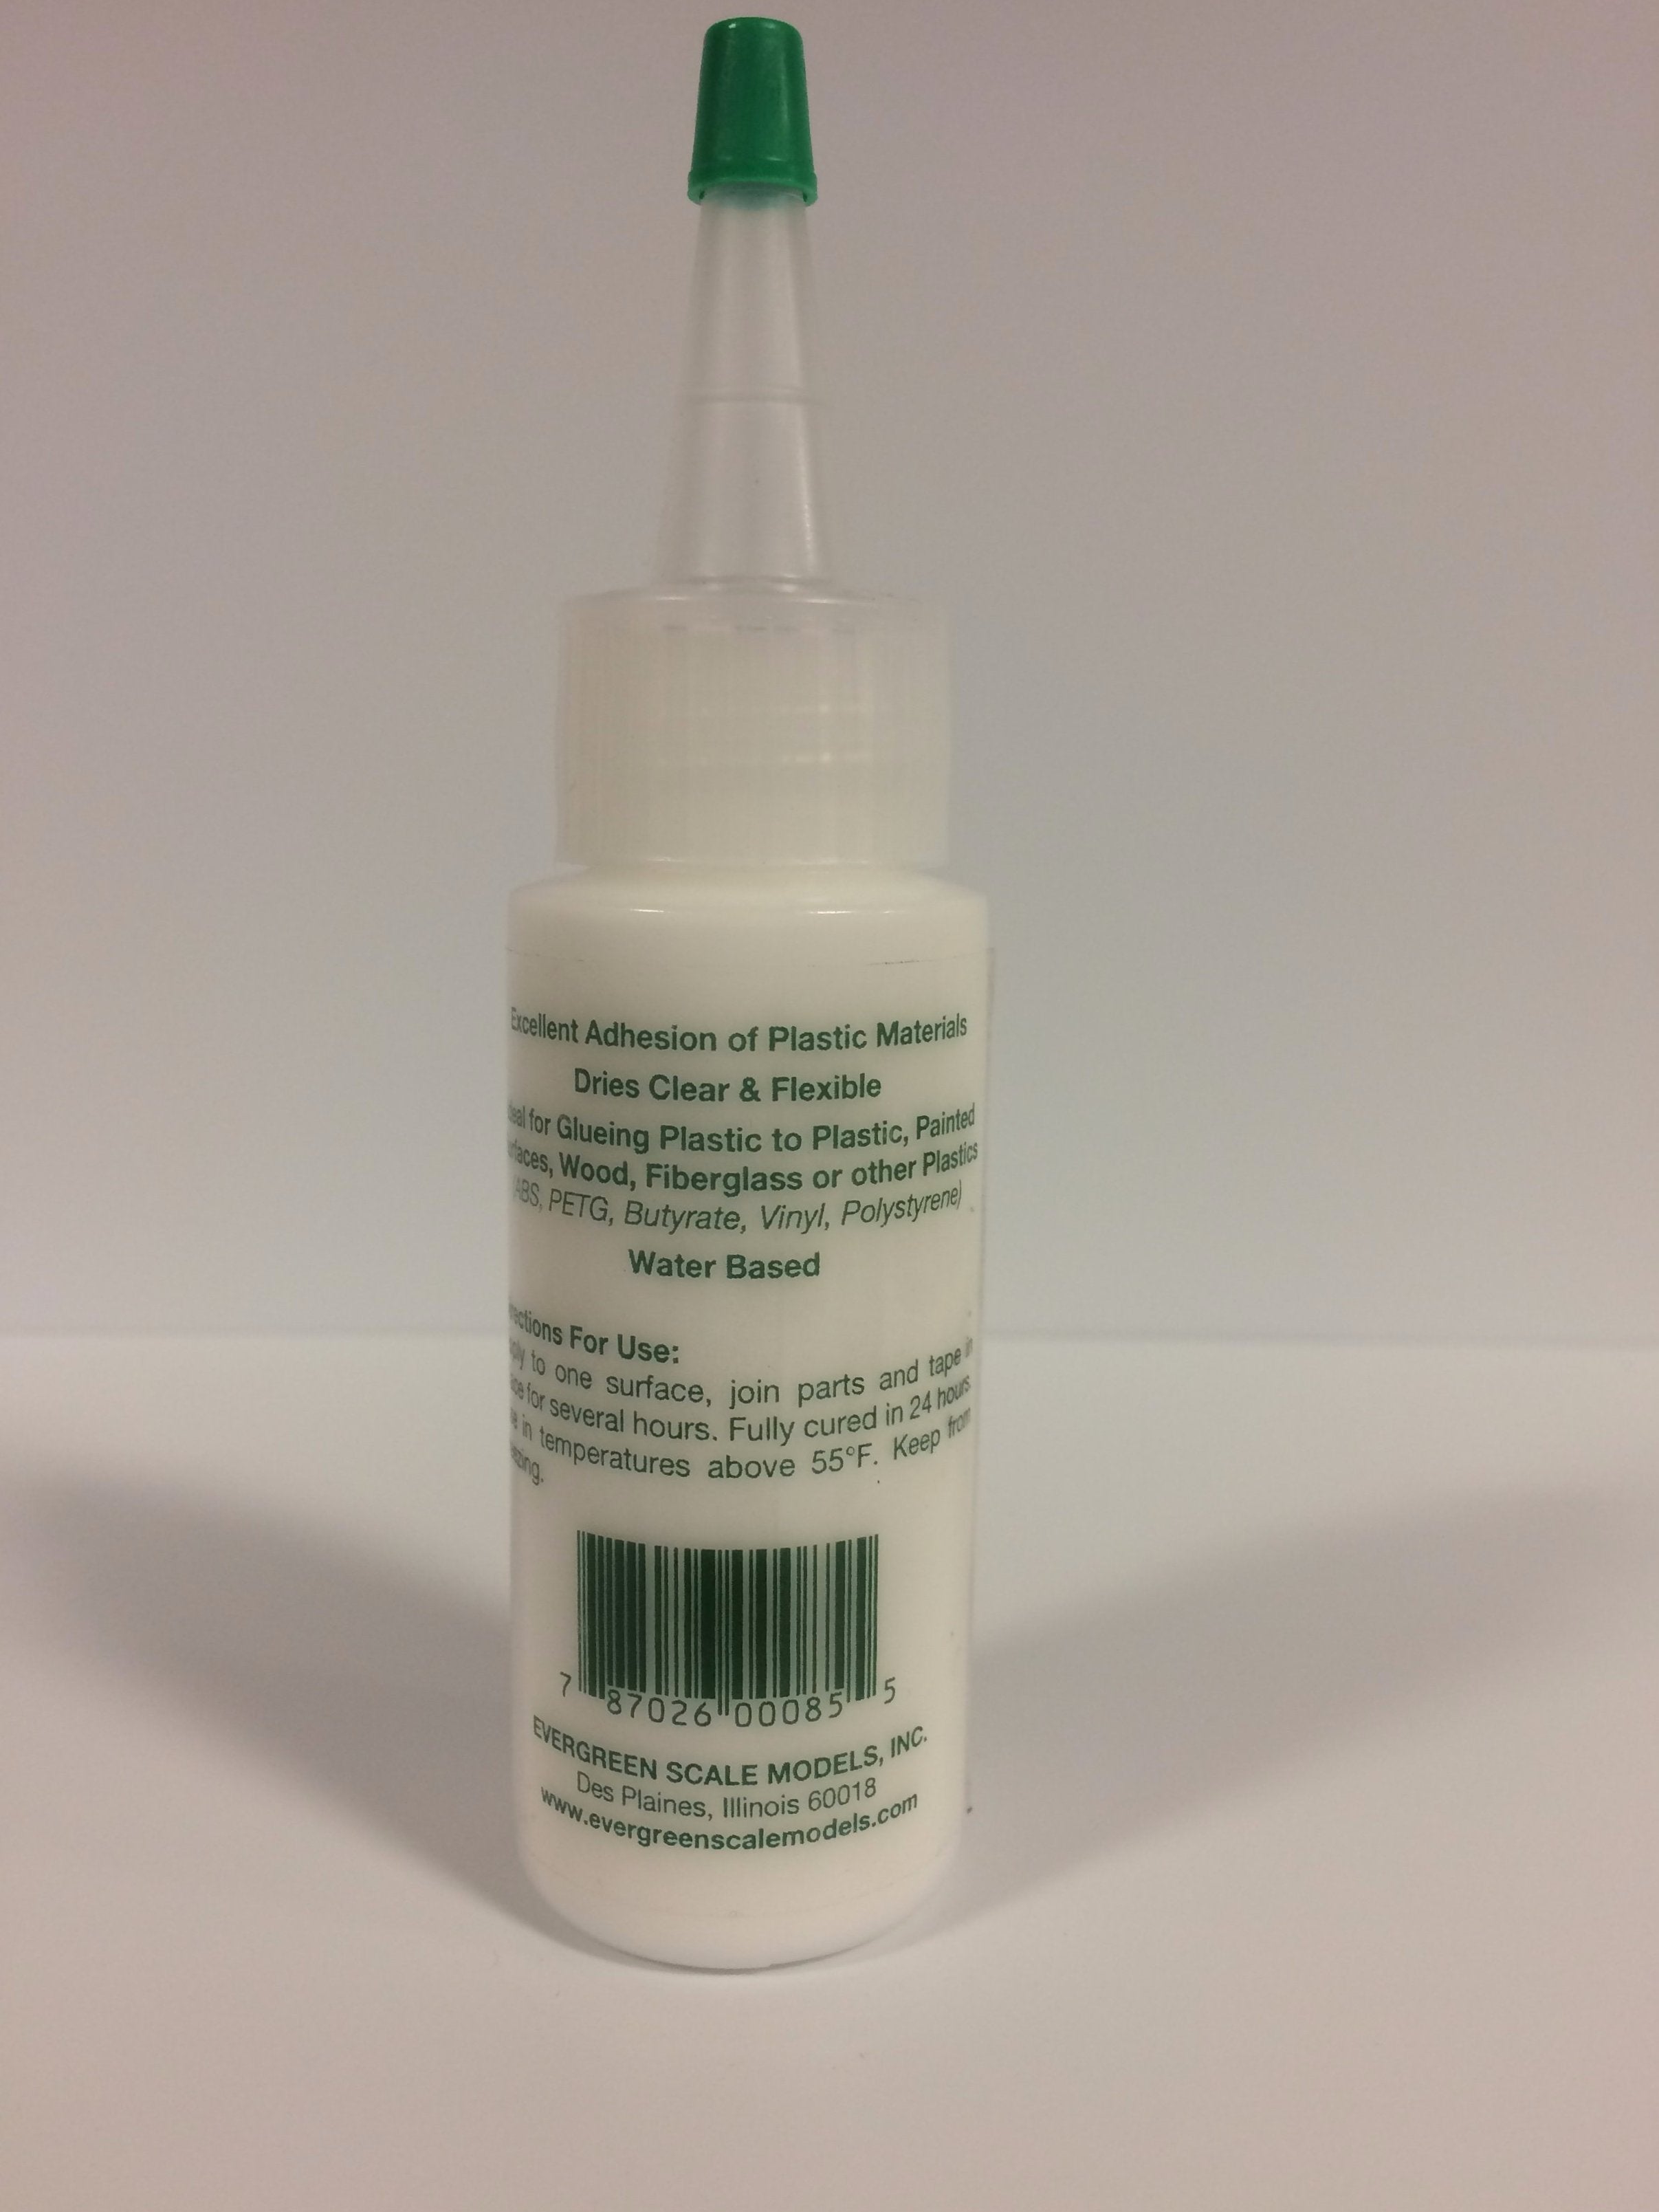 81 Evergreen Premium White Wood Glue 2 Ounce Bottle - Evergreen Scale Models